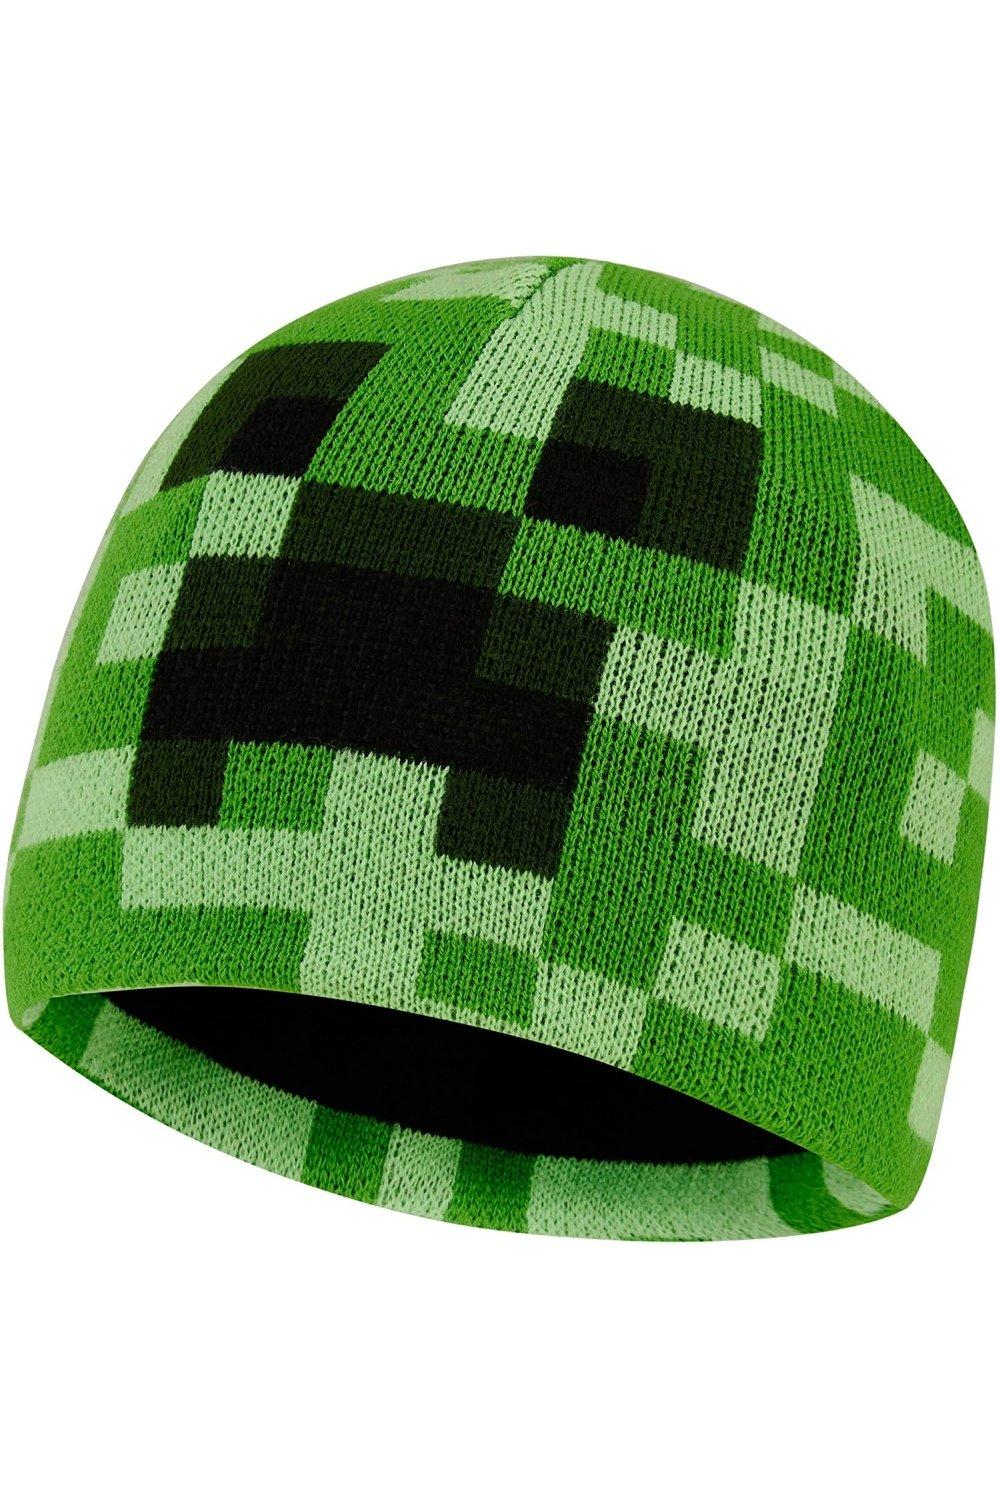 Шапка-бини Minecraft, зеленый зимняя шапка бини для мужчин вязаная шапка толстая шерстяная шапка шарф для мужчин и женщин балаклава шапка маска набор шапок 2022